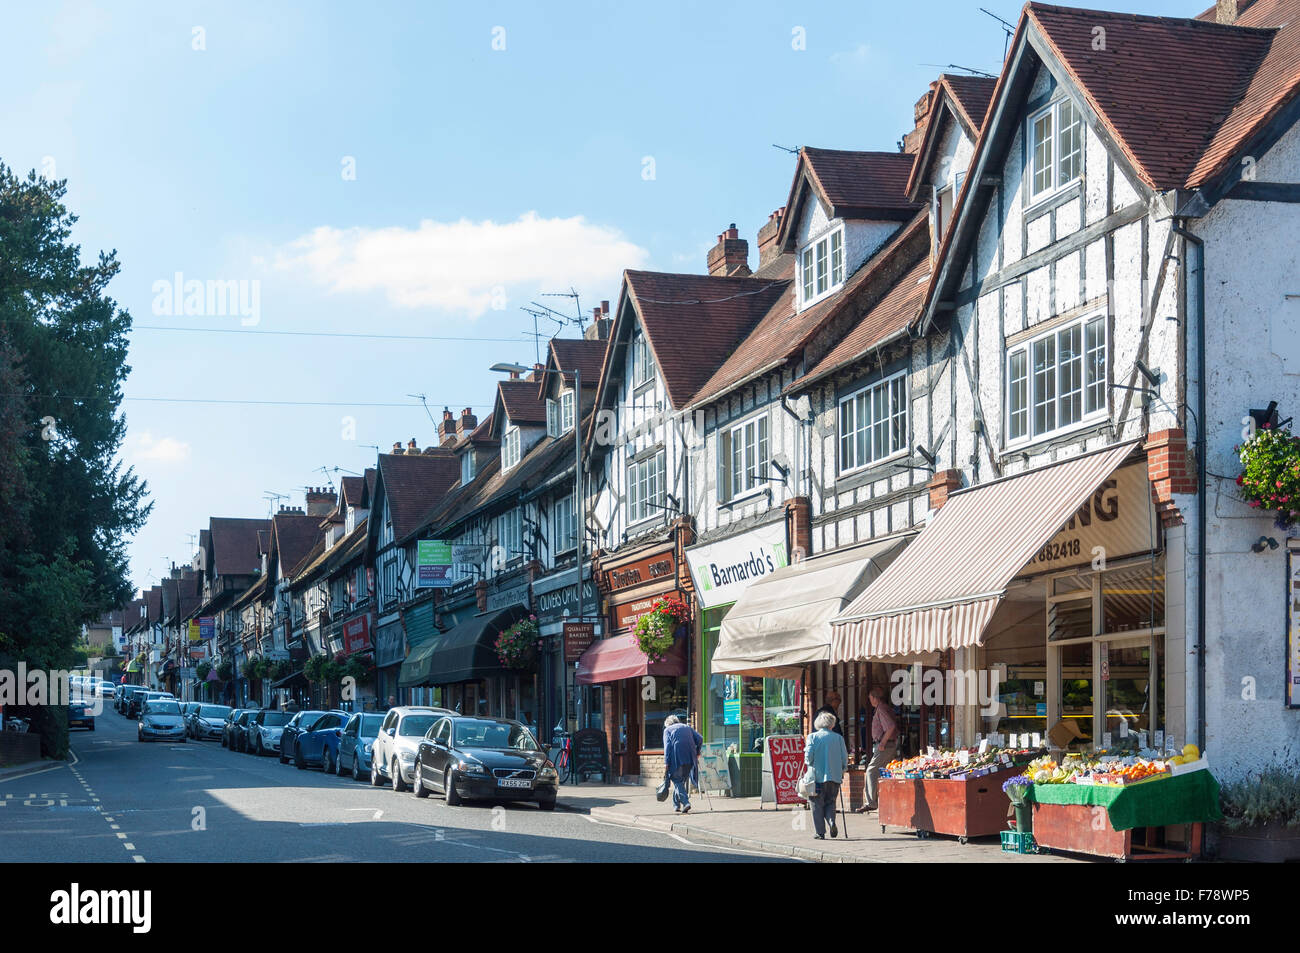 Market Place, Chalfont St Peter, Buckinghamshire, England, United Kingdom Stock Photo